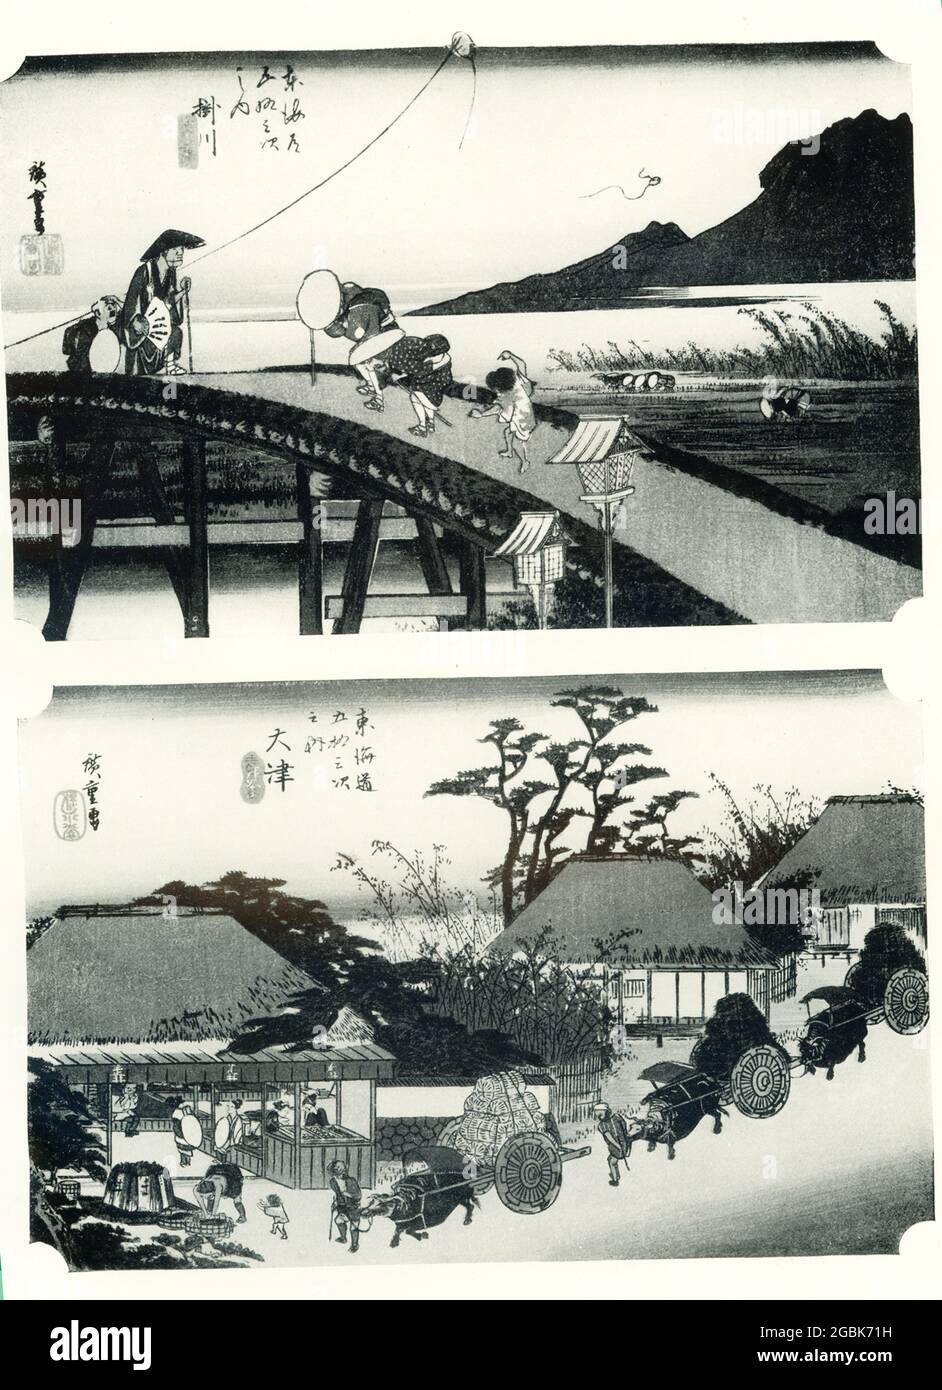 The caption reads: “Hiroshige - Stations Kakegawa and Otsu on the Tokaido.” Utagawa Hiroshige, born Andō Hiroshige, was a Japanese ukiyo-e artist, considered the last great master of that tradition. Stock Photo